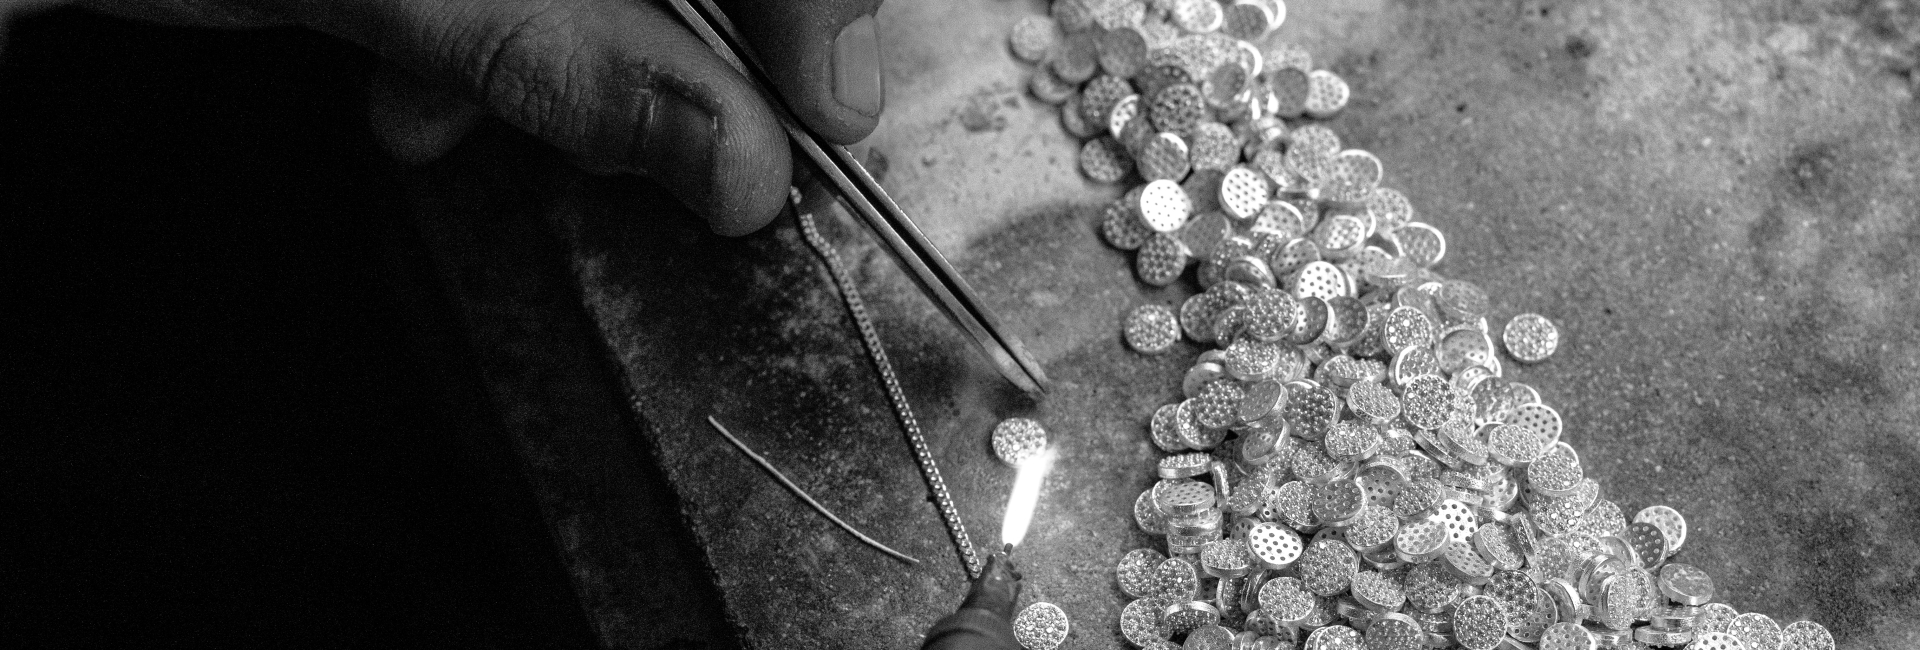 Manufacturing jewelry